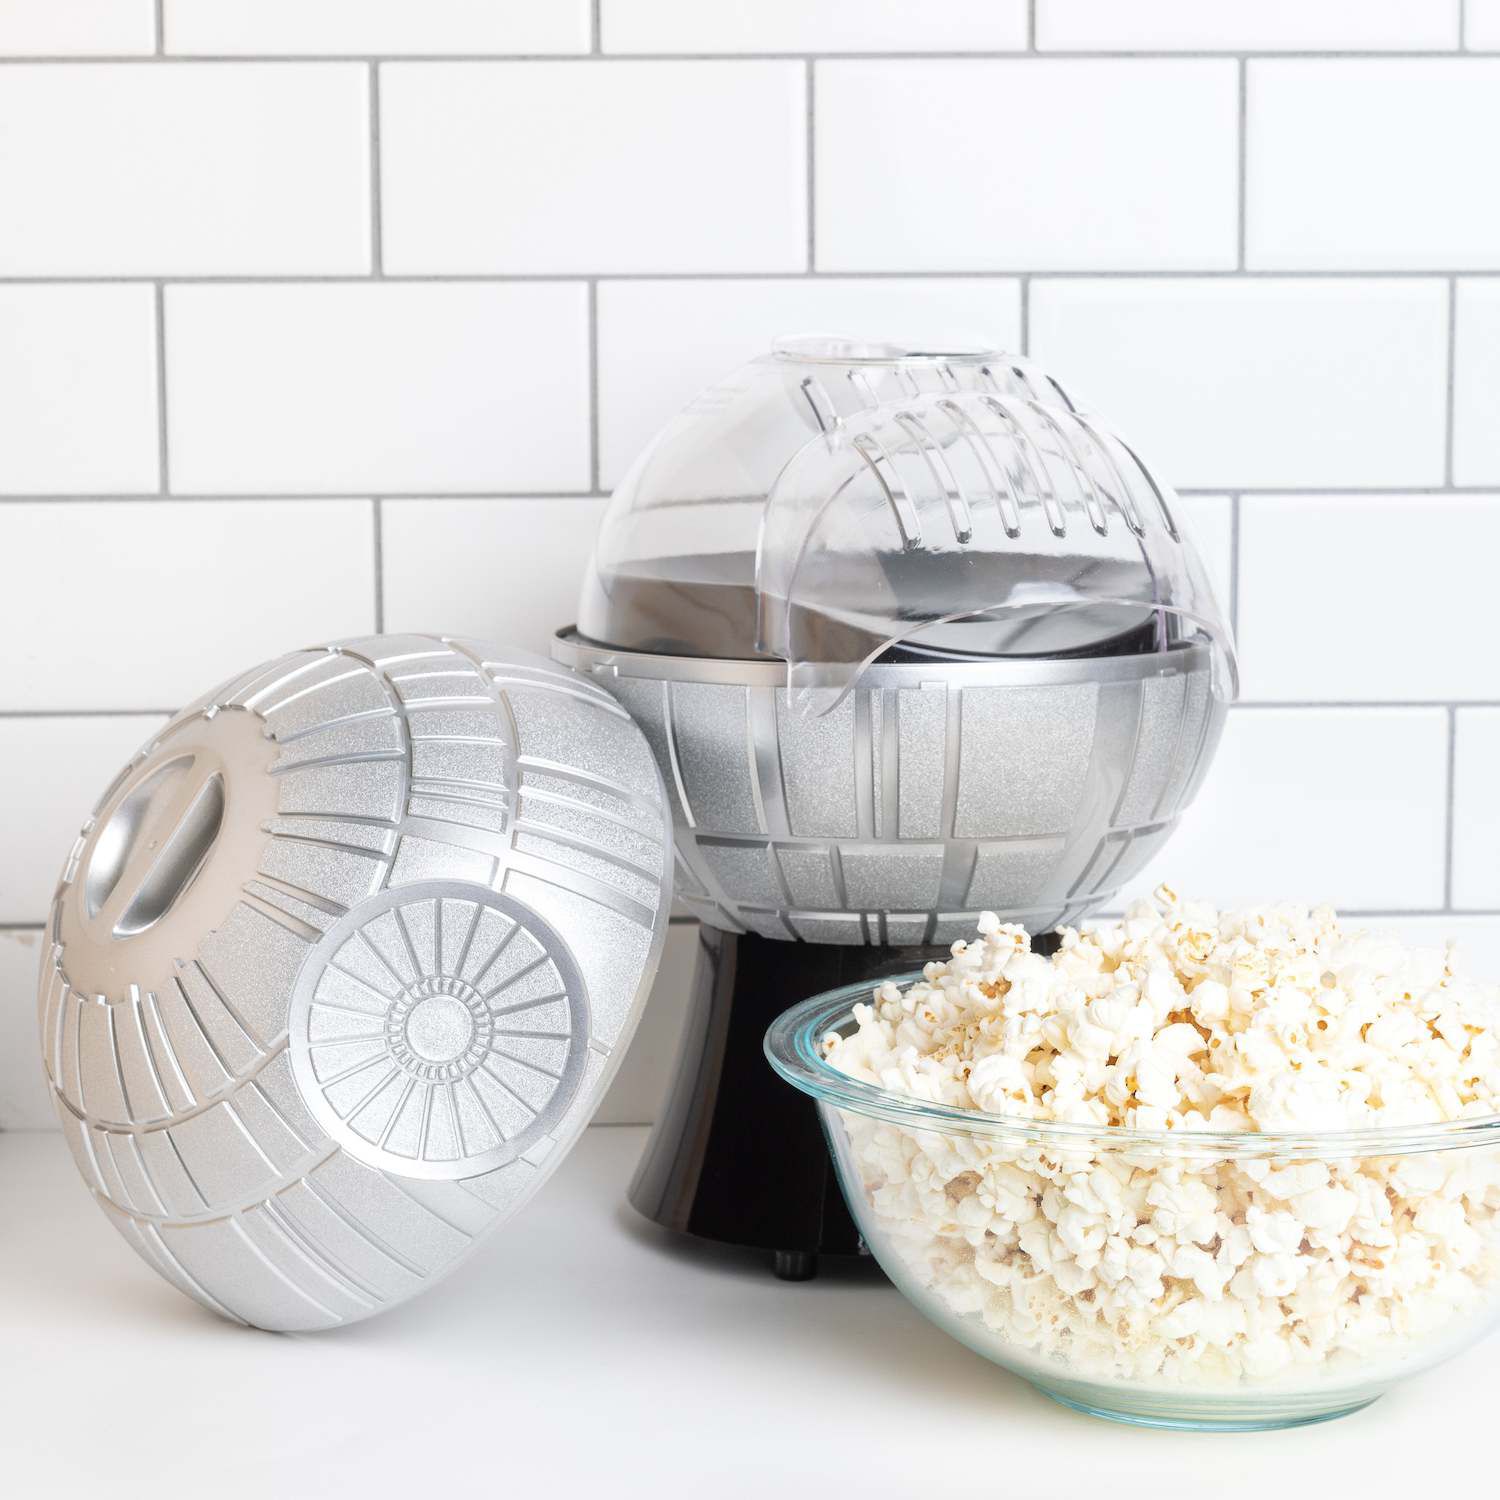 R2-D2 Stir Popcorn Popper